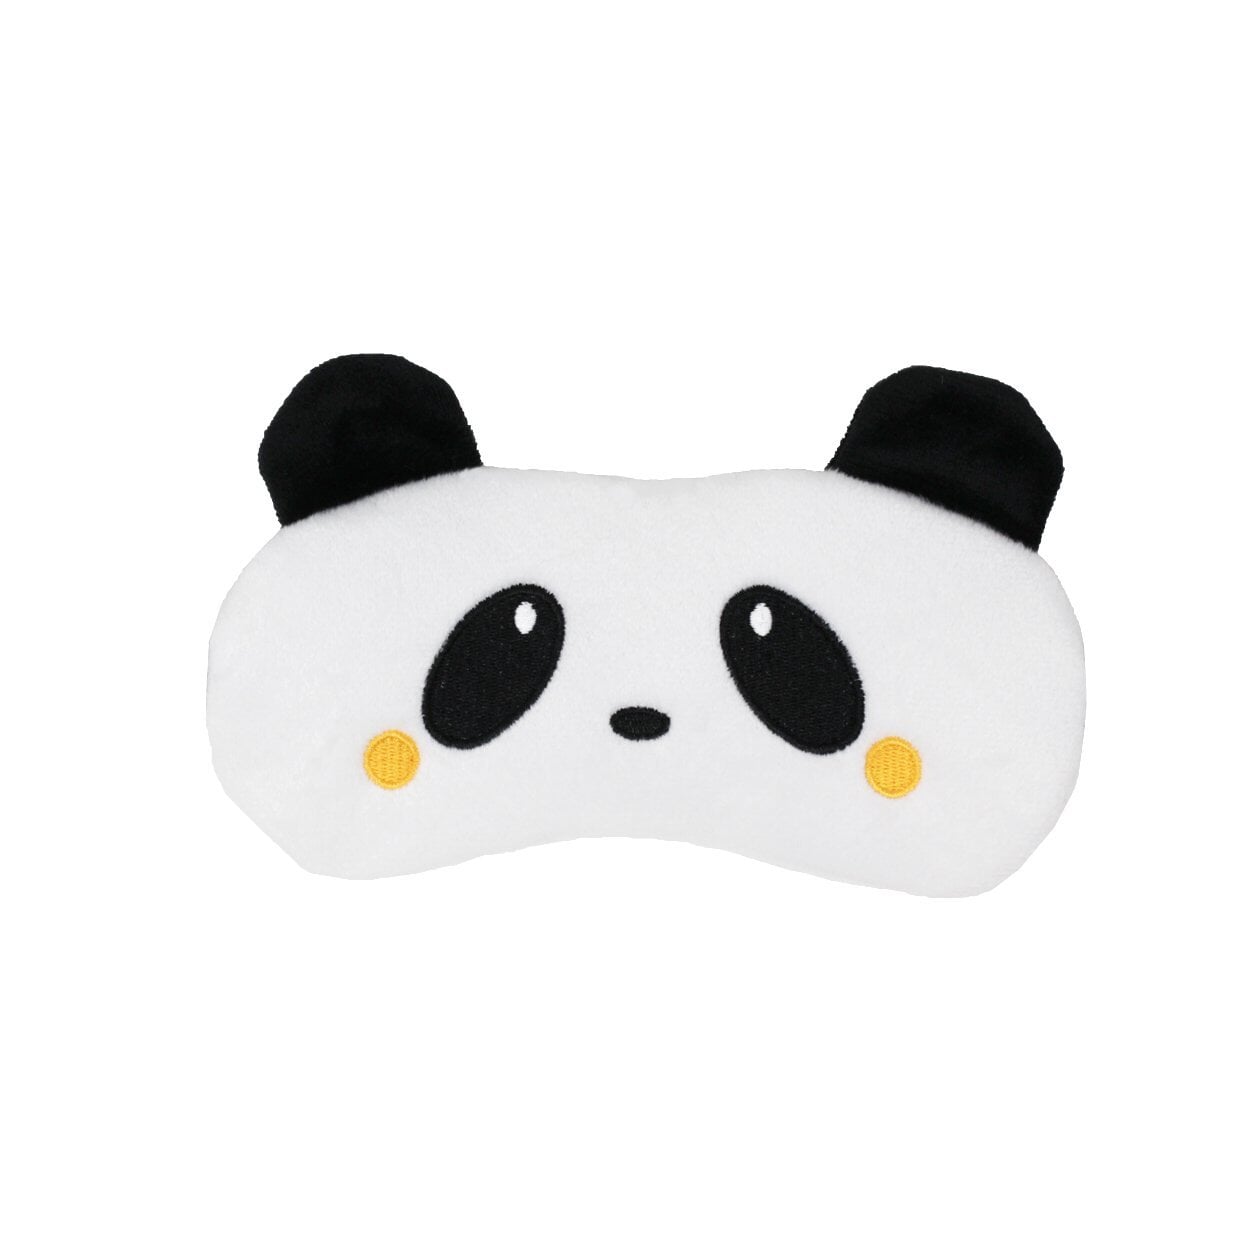 Peaceful Panda Plush Sleep Mask Sleep Masks The Crème Shop 